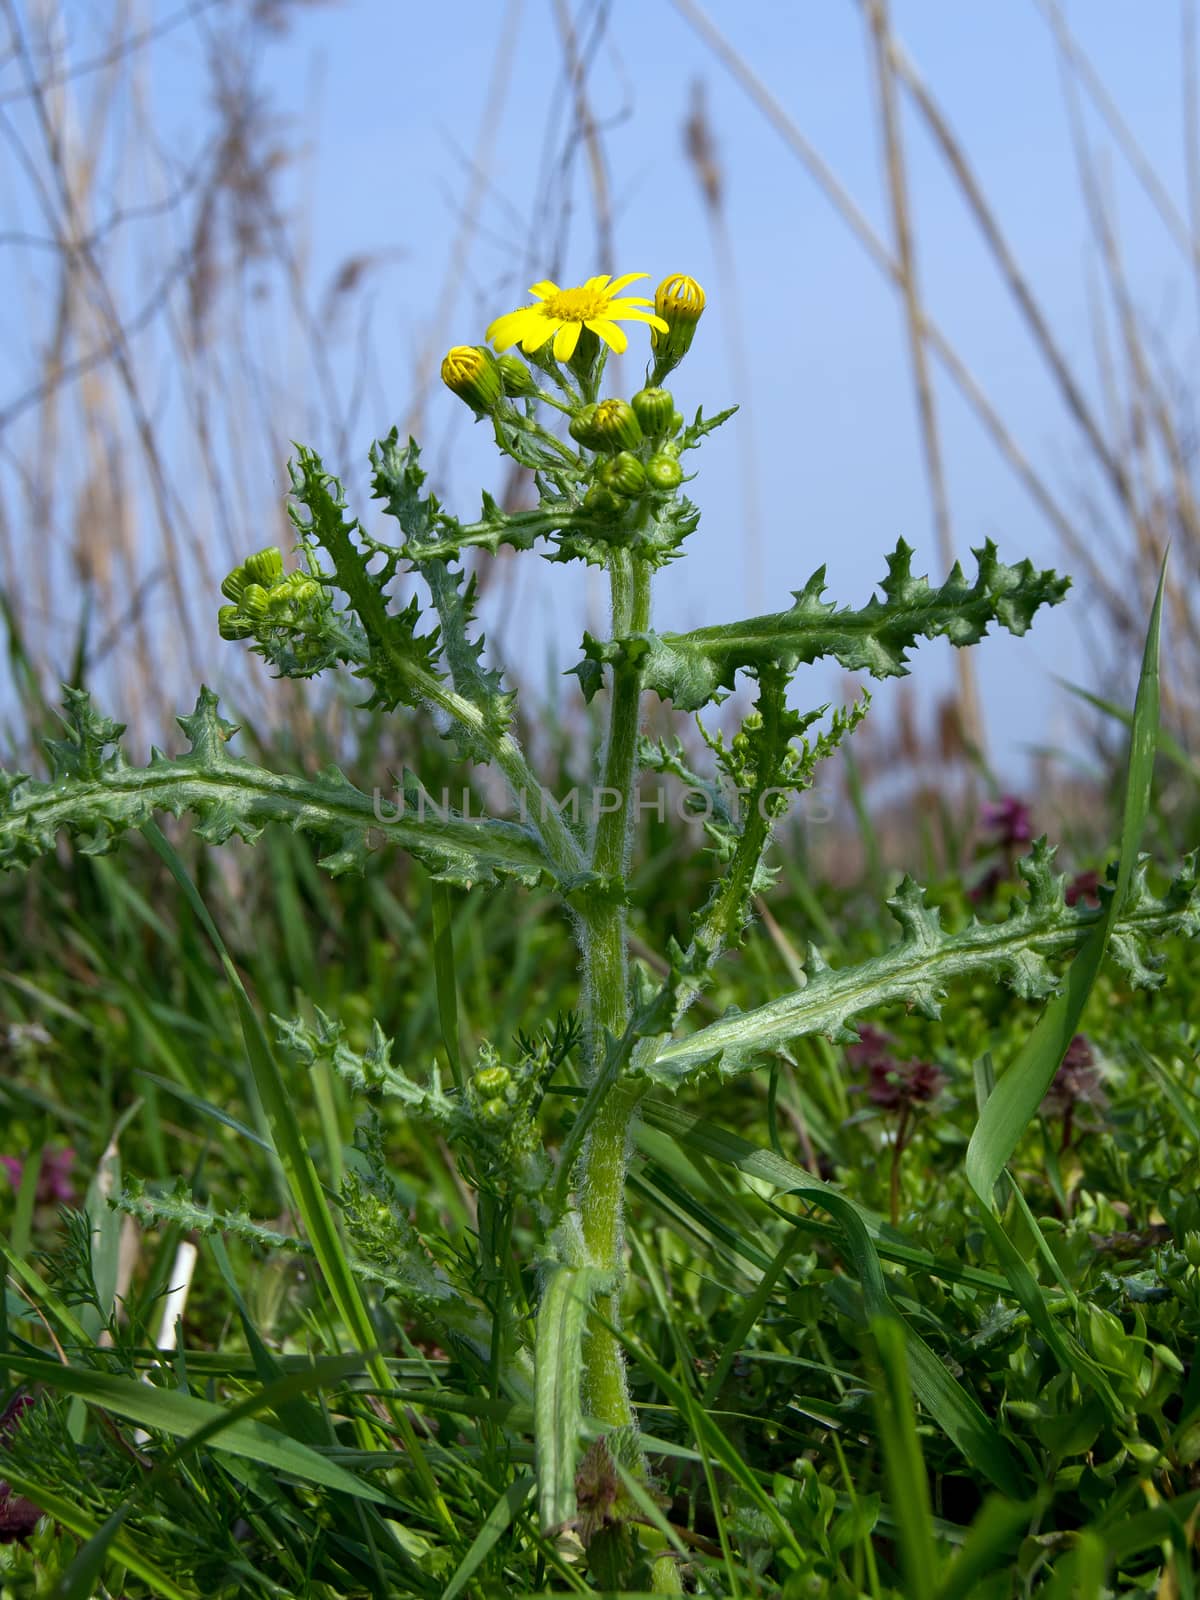 The common groundsel (Senecio vulgaris) in early spring weeds.